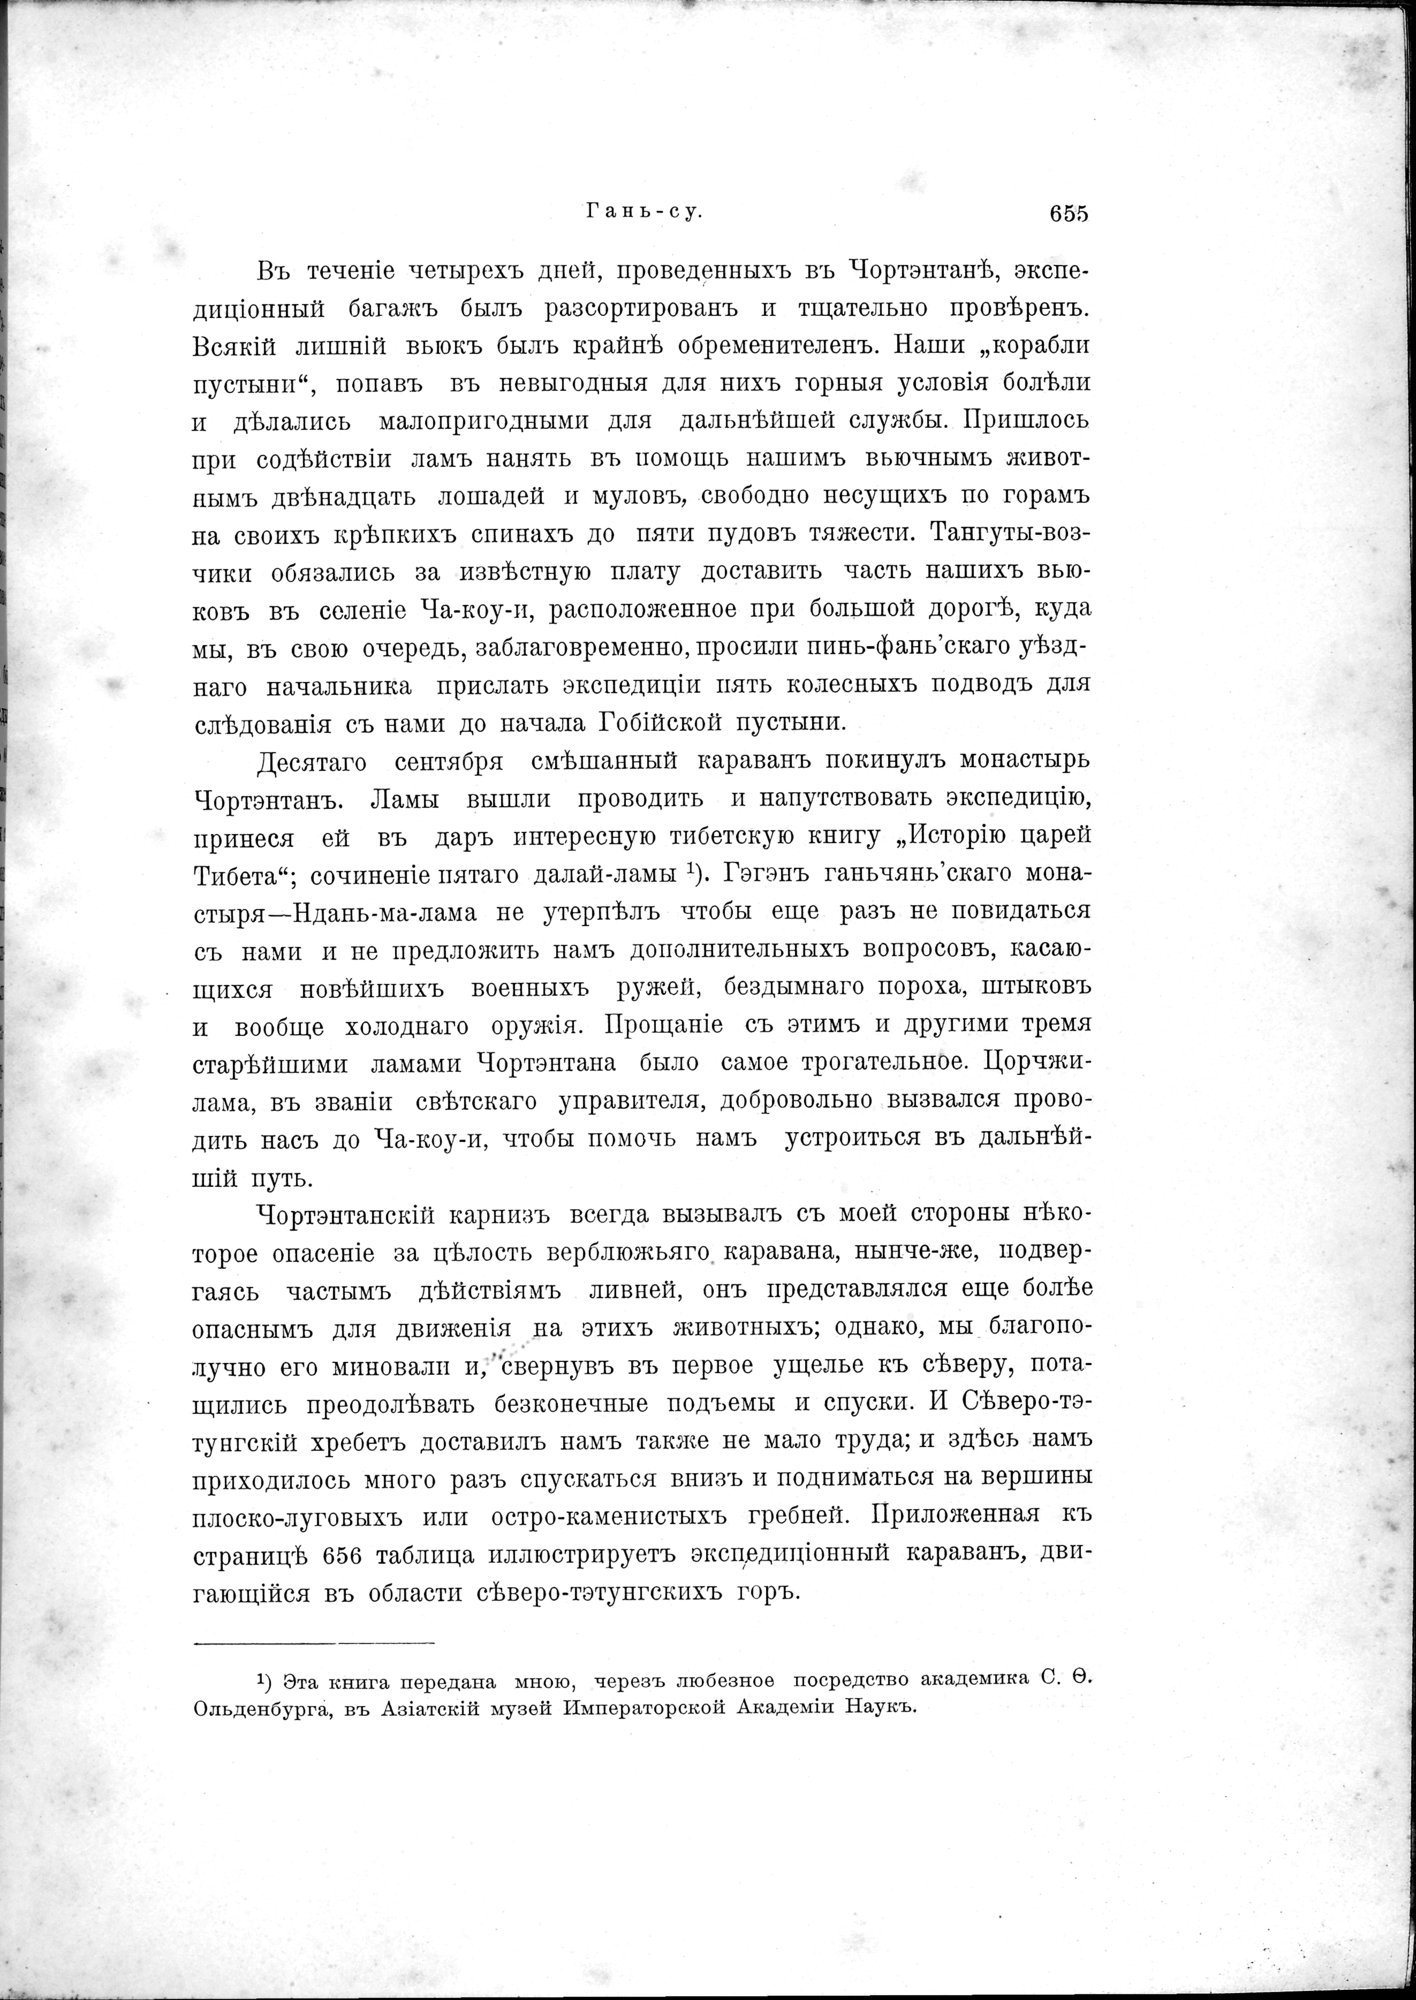 Mongoliia i Kam : vol.2 / Page 485 (Grayscale High Resolution Image)